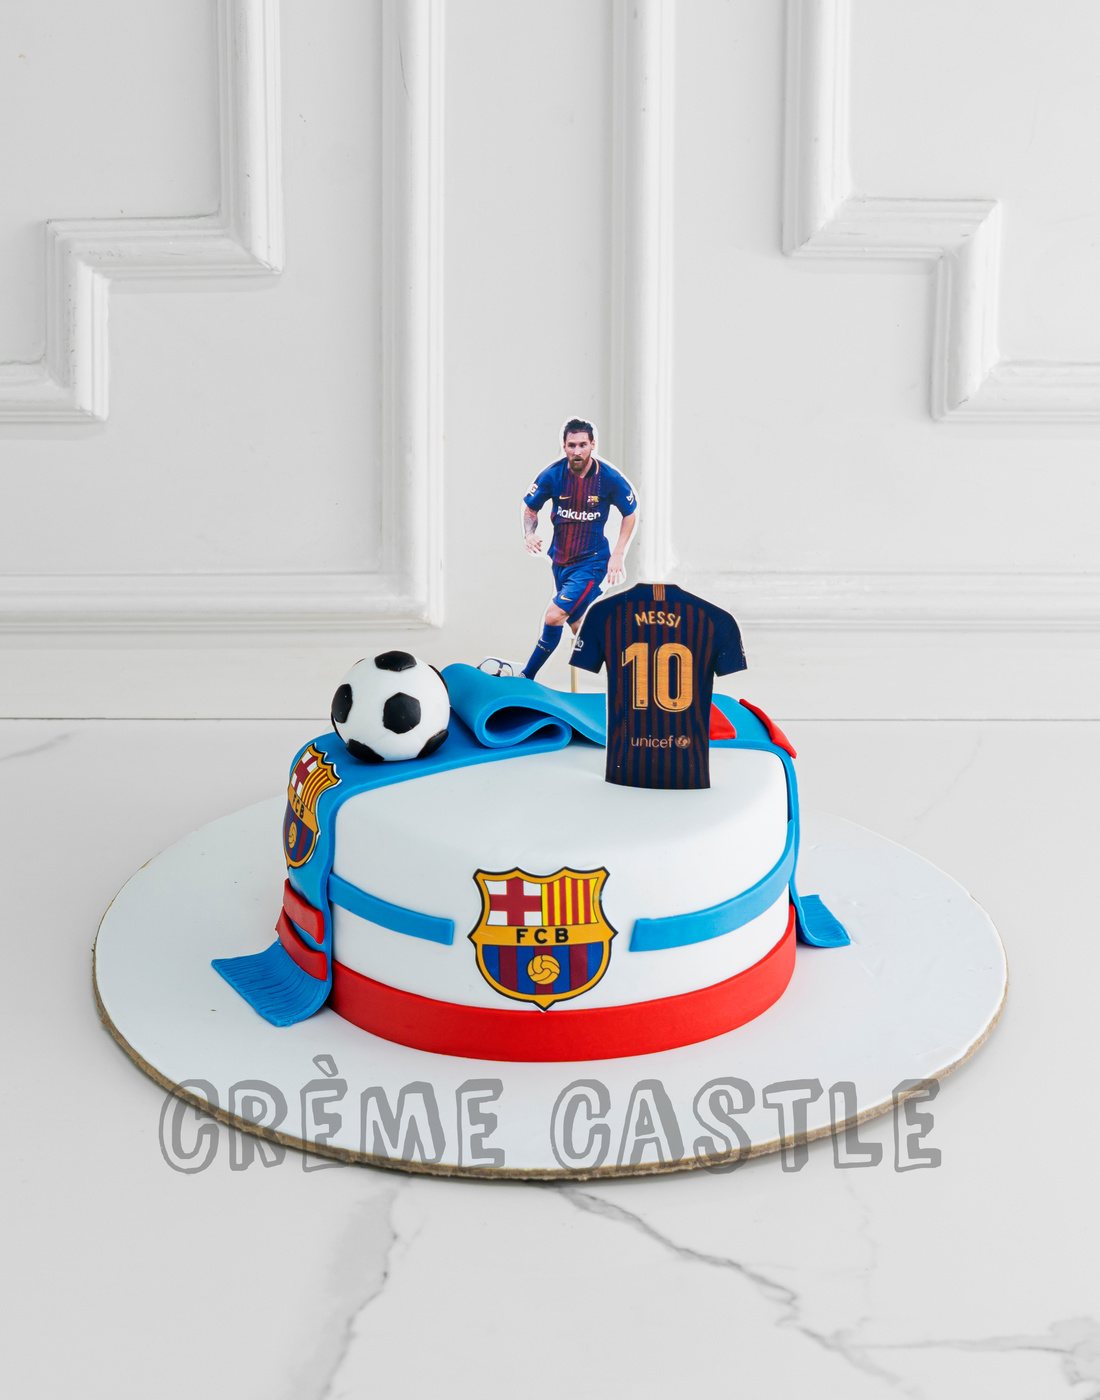 Barcelona Messi Cake - Creme Castle